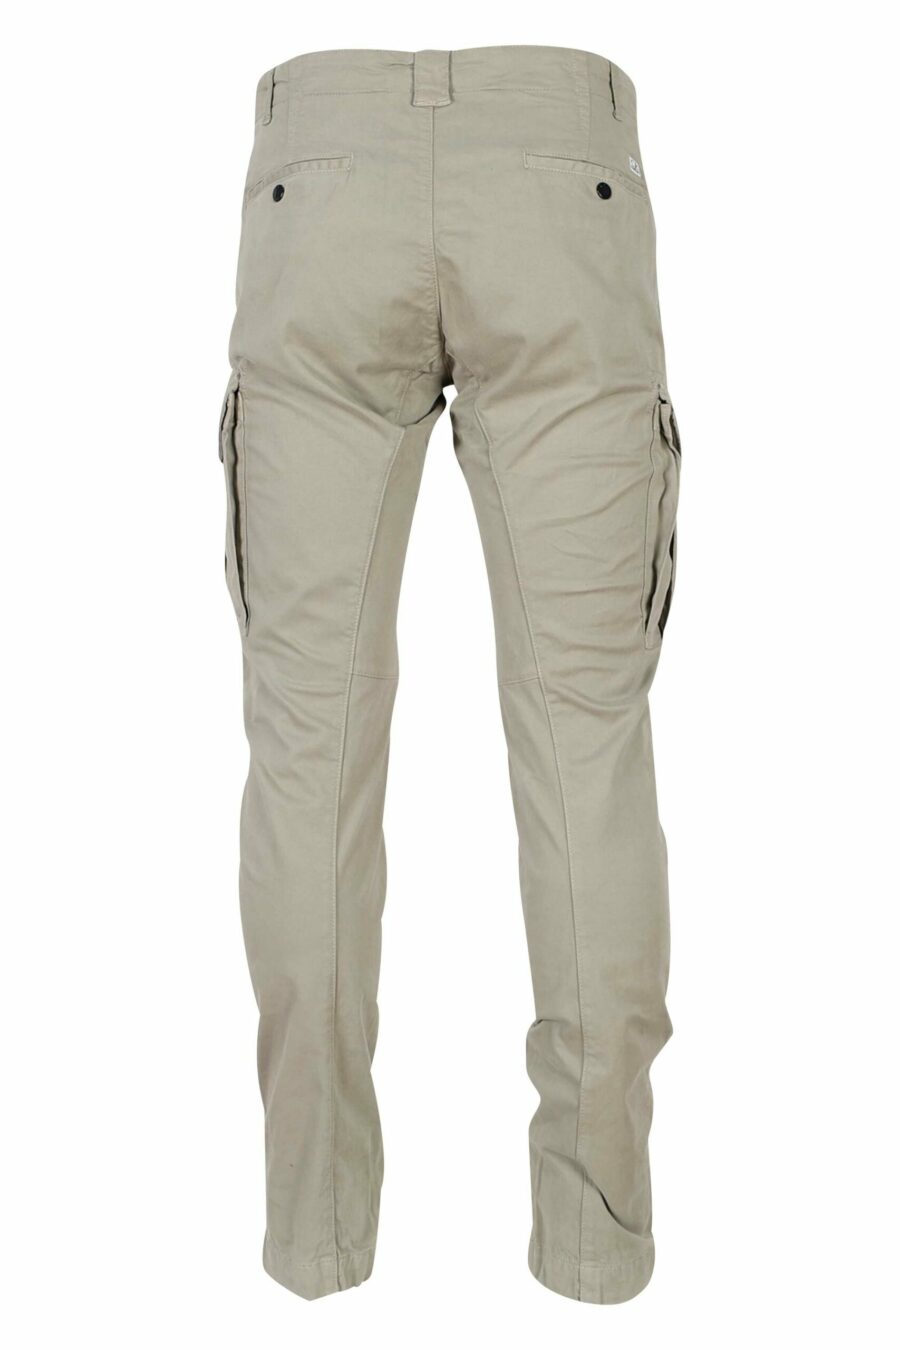 Pantalón beige estilo cargo de satén elástico y logo lente - 7620943595307 2 1 scaled